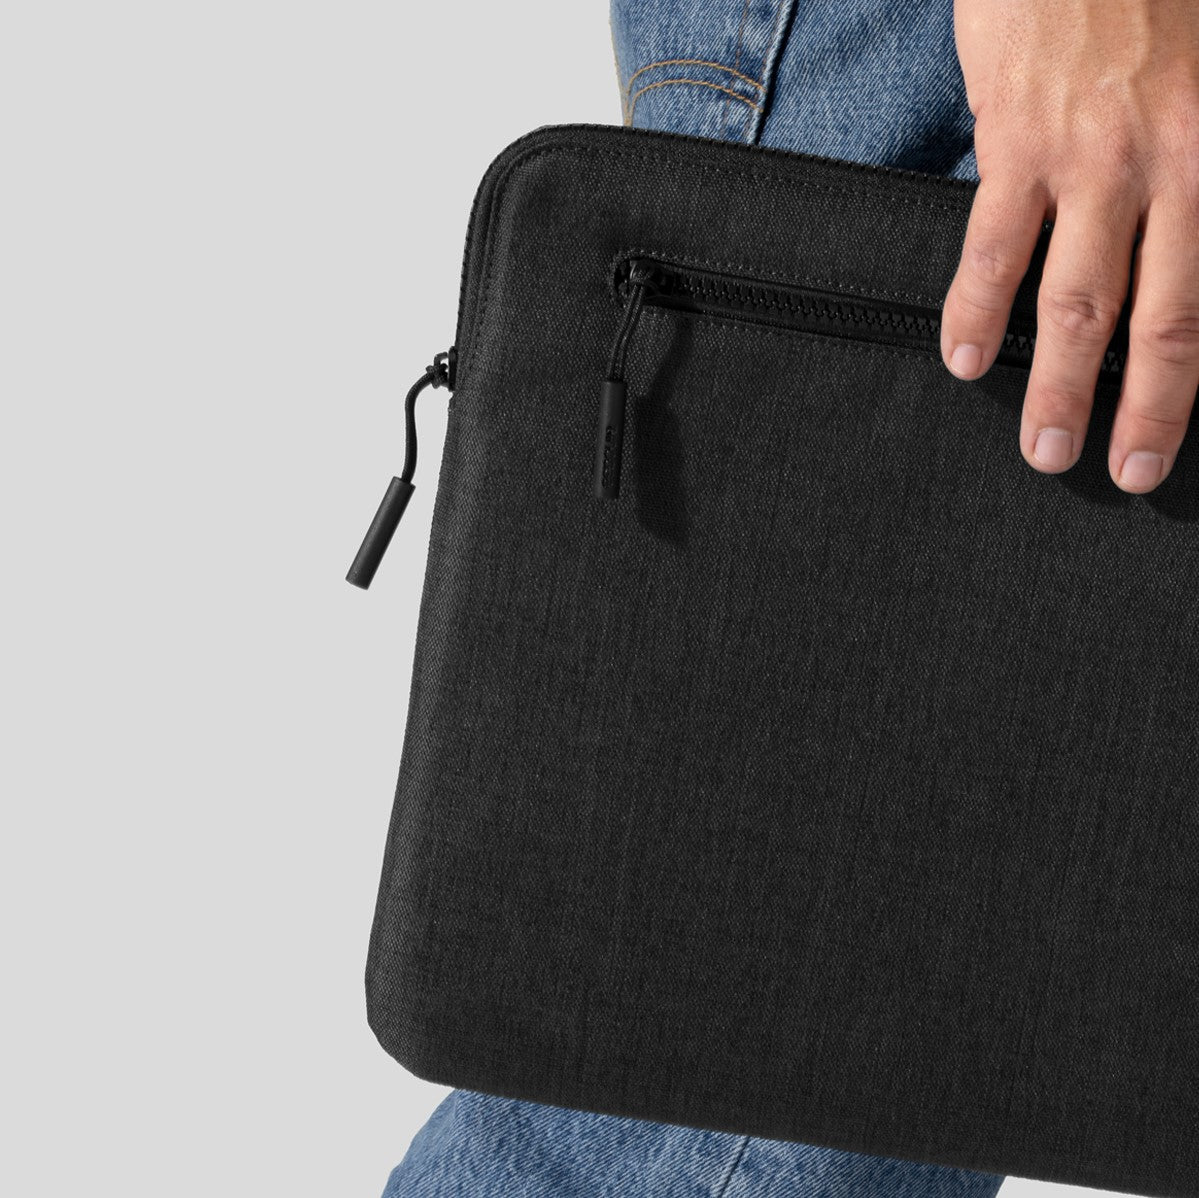 Compact Sleeve in Woolenex for 13-inch MacBook Pro & MacBook Air Retina - Charcaol -